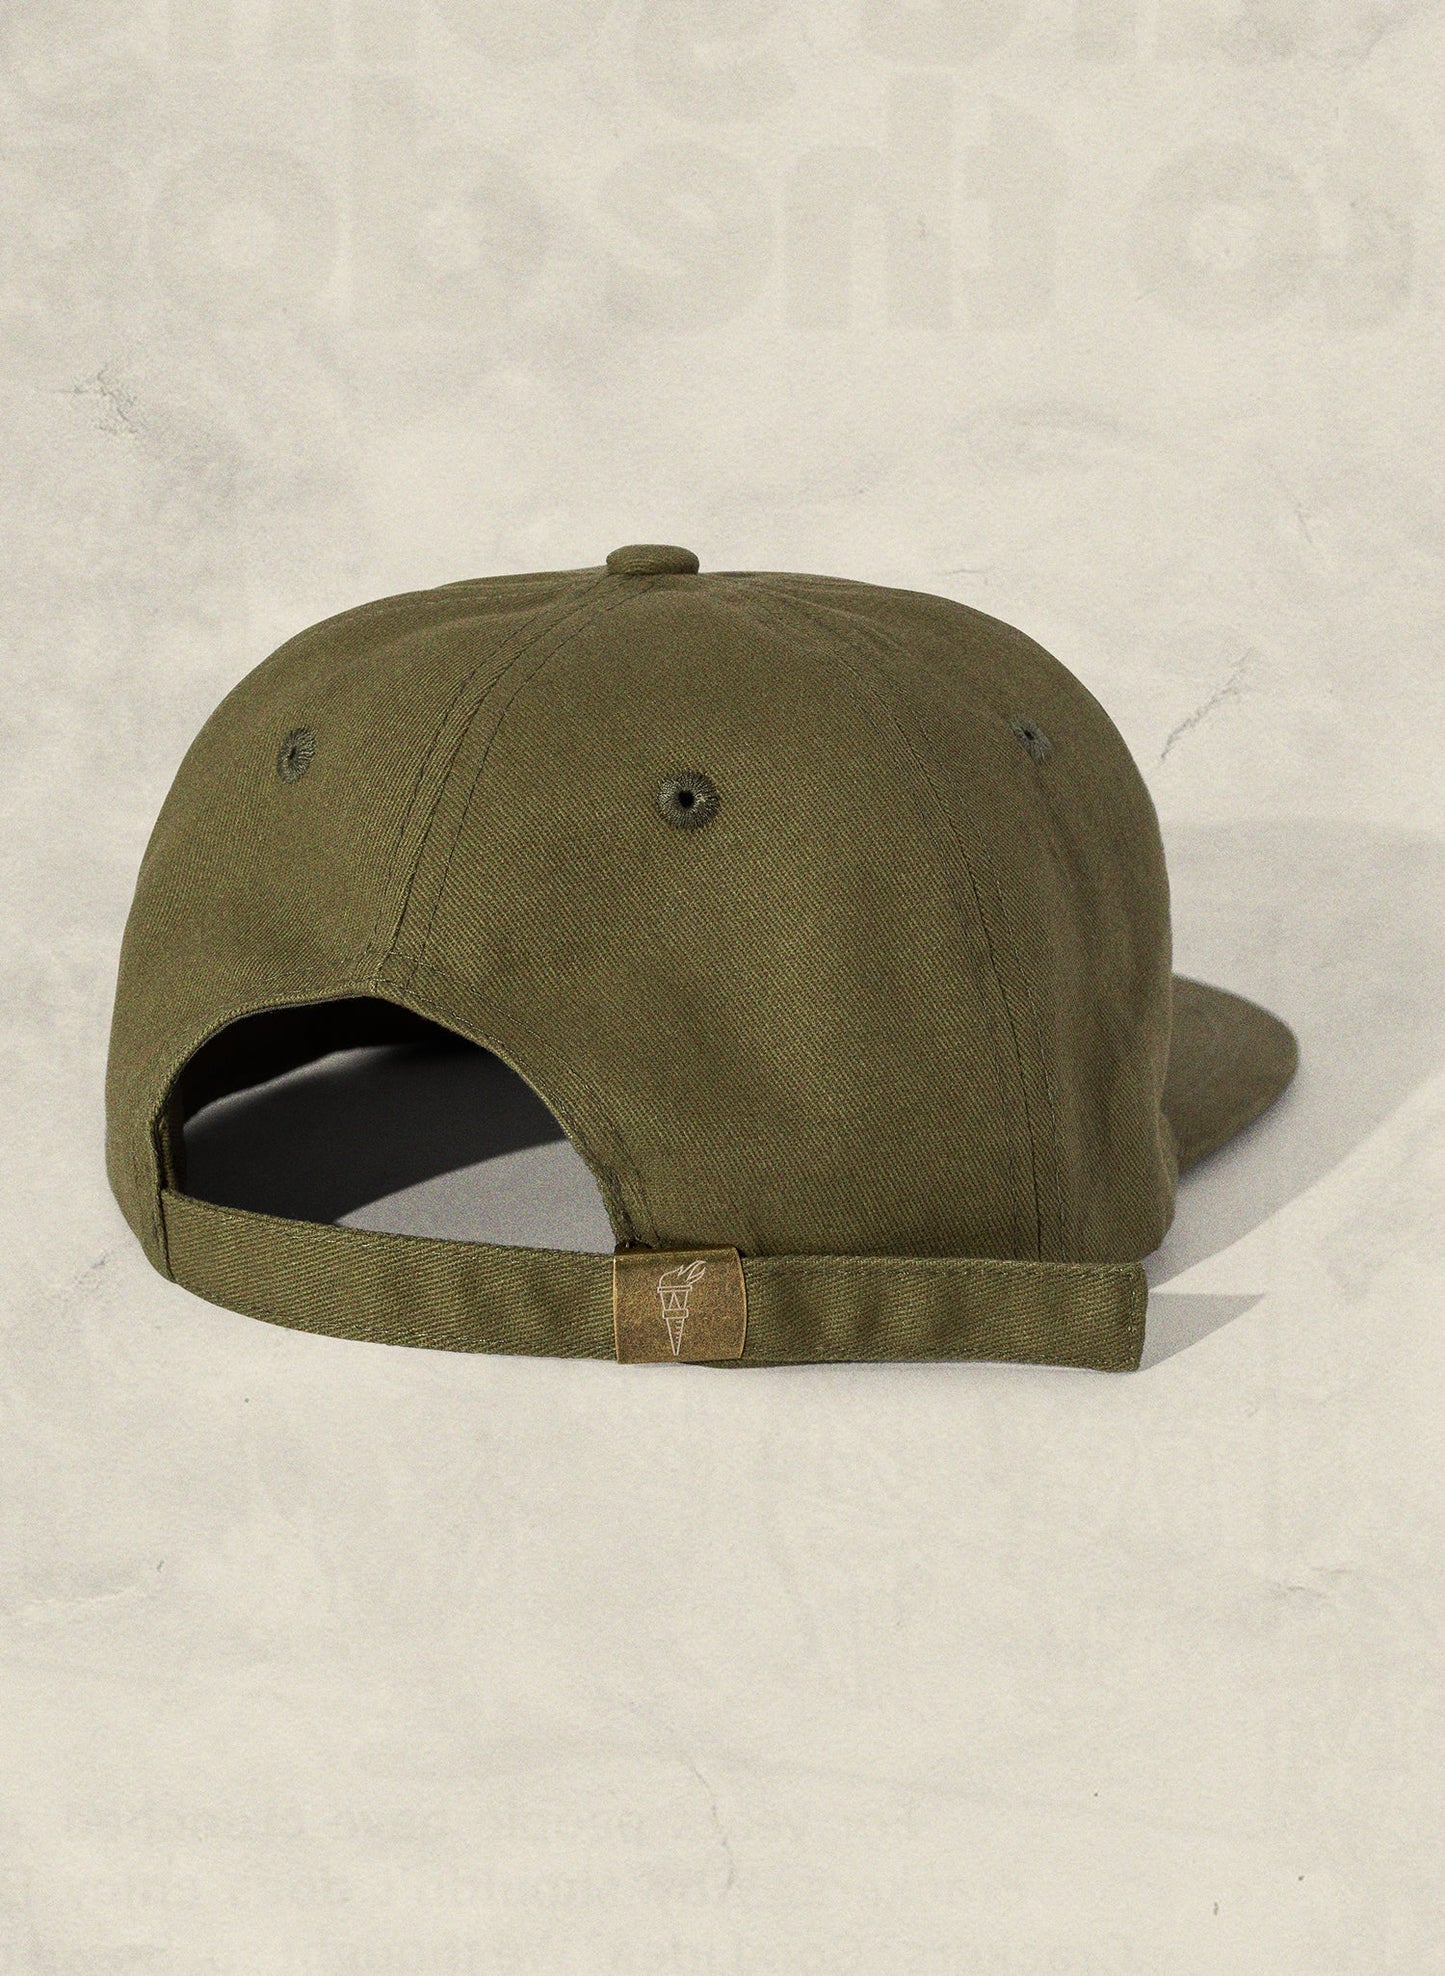 Weld Mfg Field Trip Hat - Unstructured 6 panel brushed cotton twill strapback hat, vintage inspired baseball hat, olive green